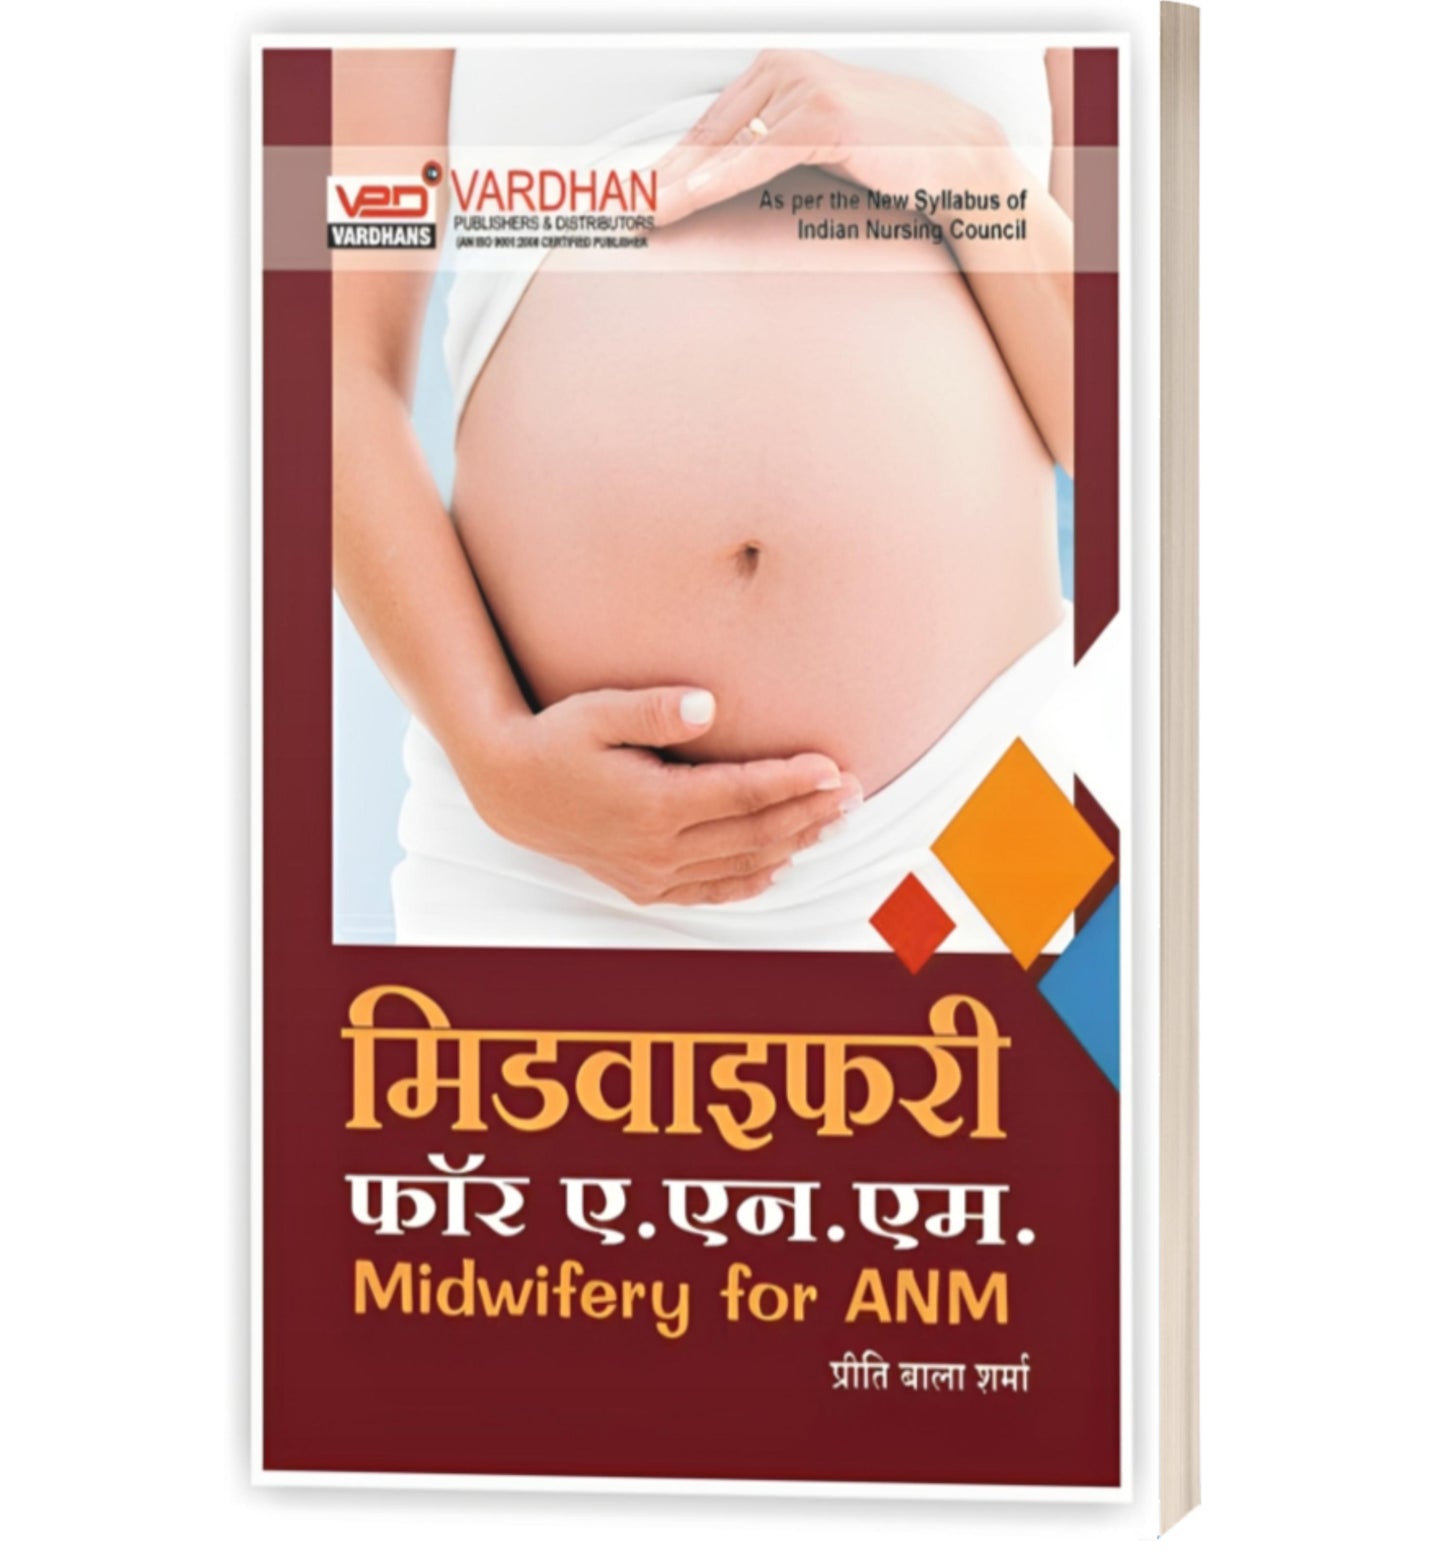 Midwifery for ANM